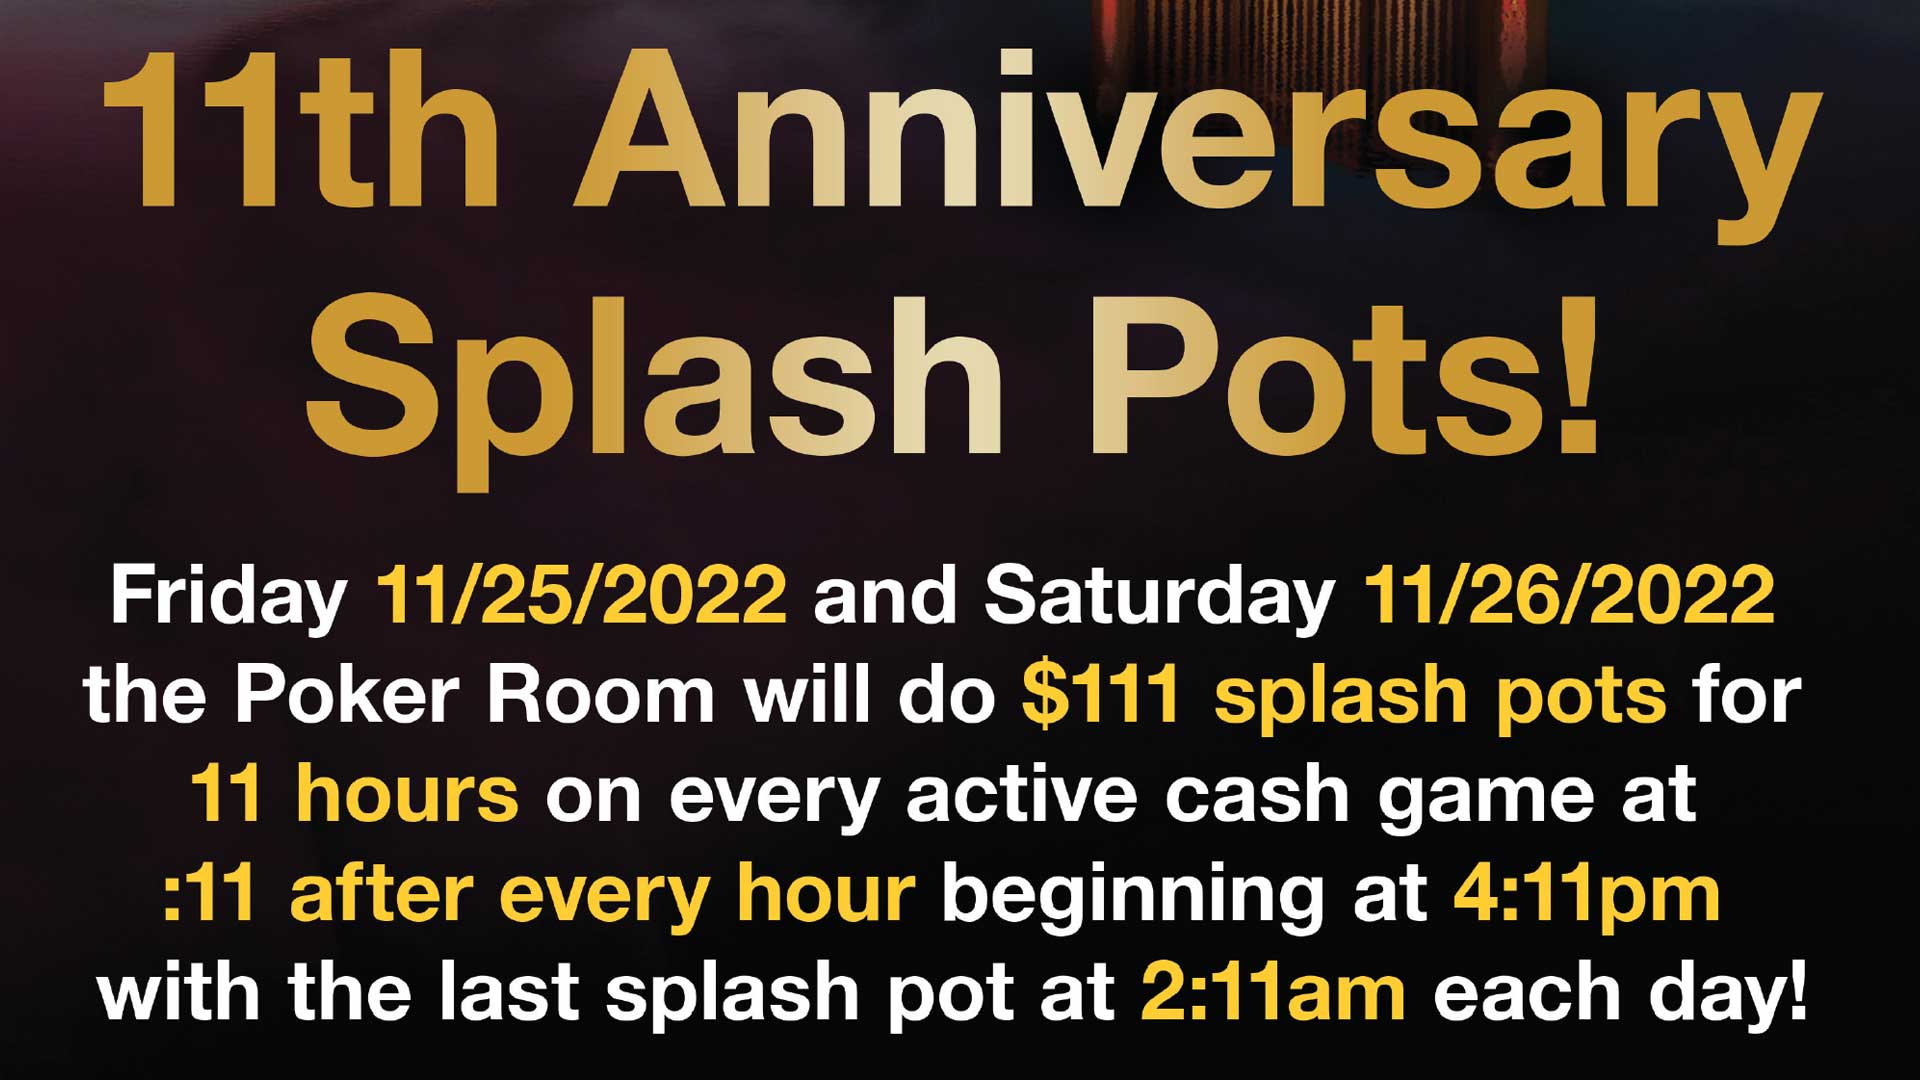 11th-Anniversary-Splash-Pots-web-banner_v01_1920x1080